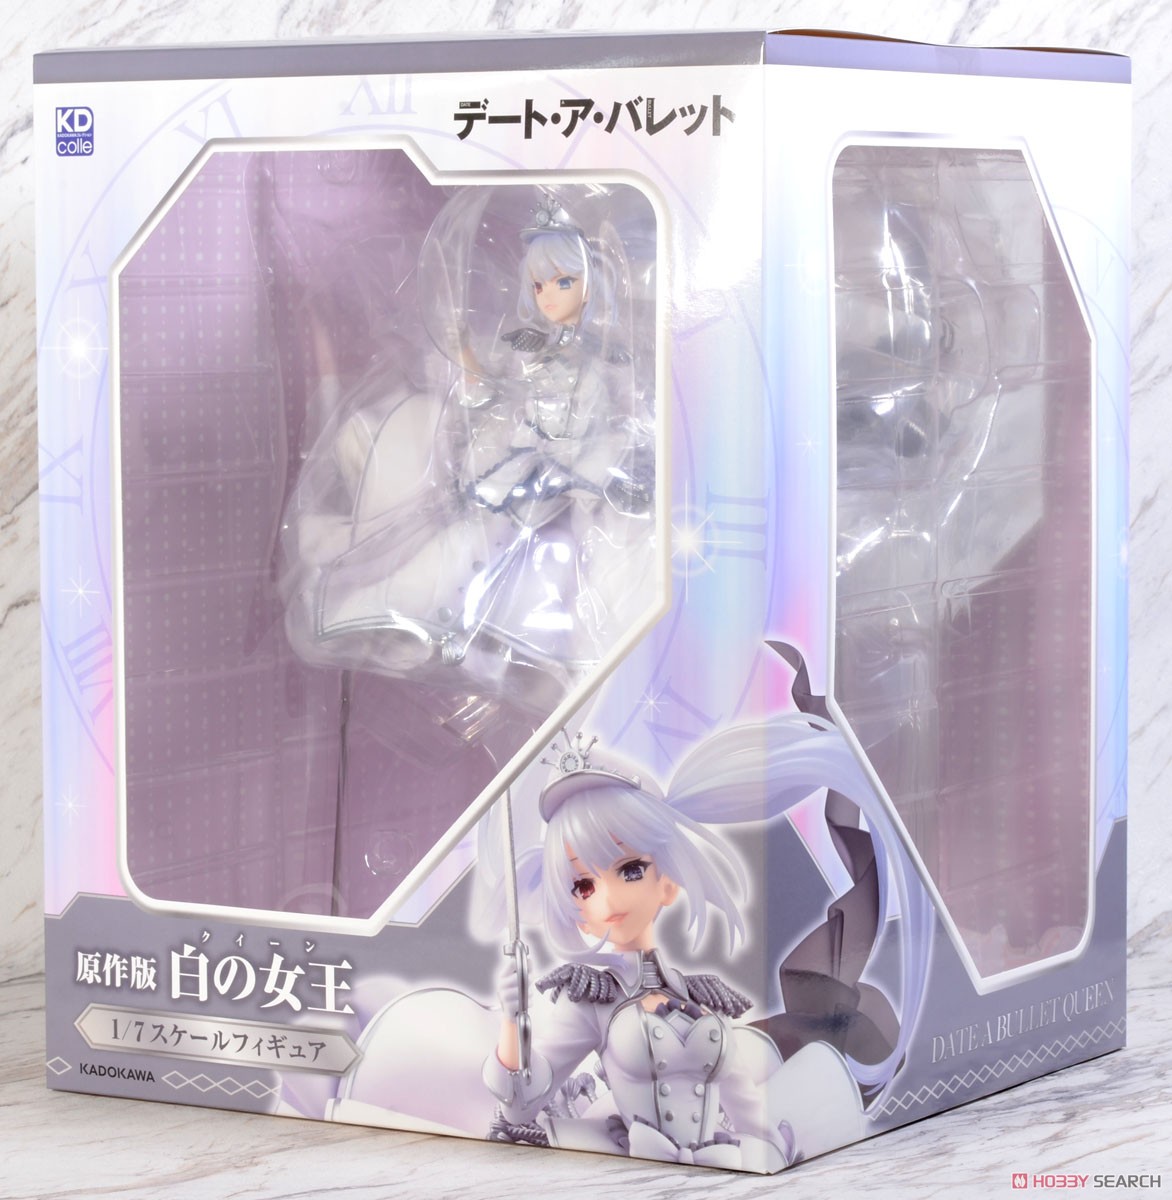 Date A Bullet Light Novel: White Queen (PVC Figure) Package1